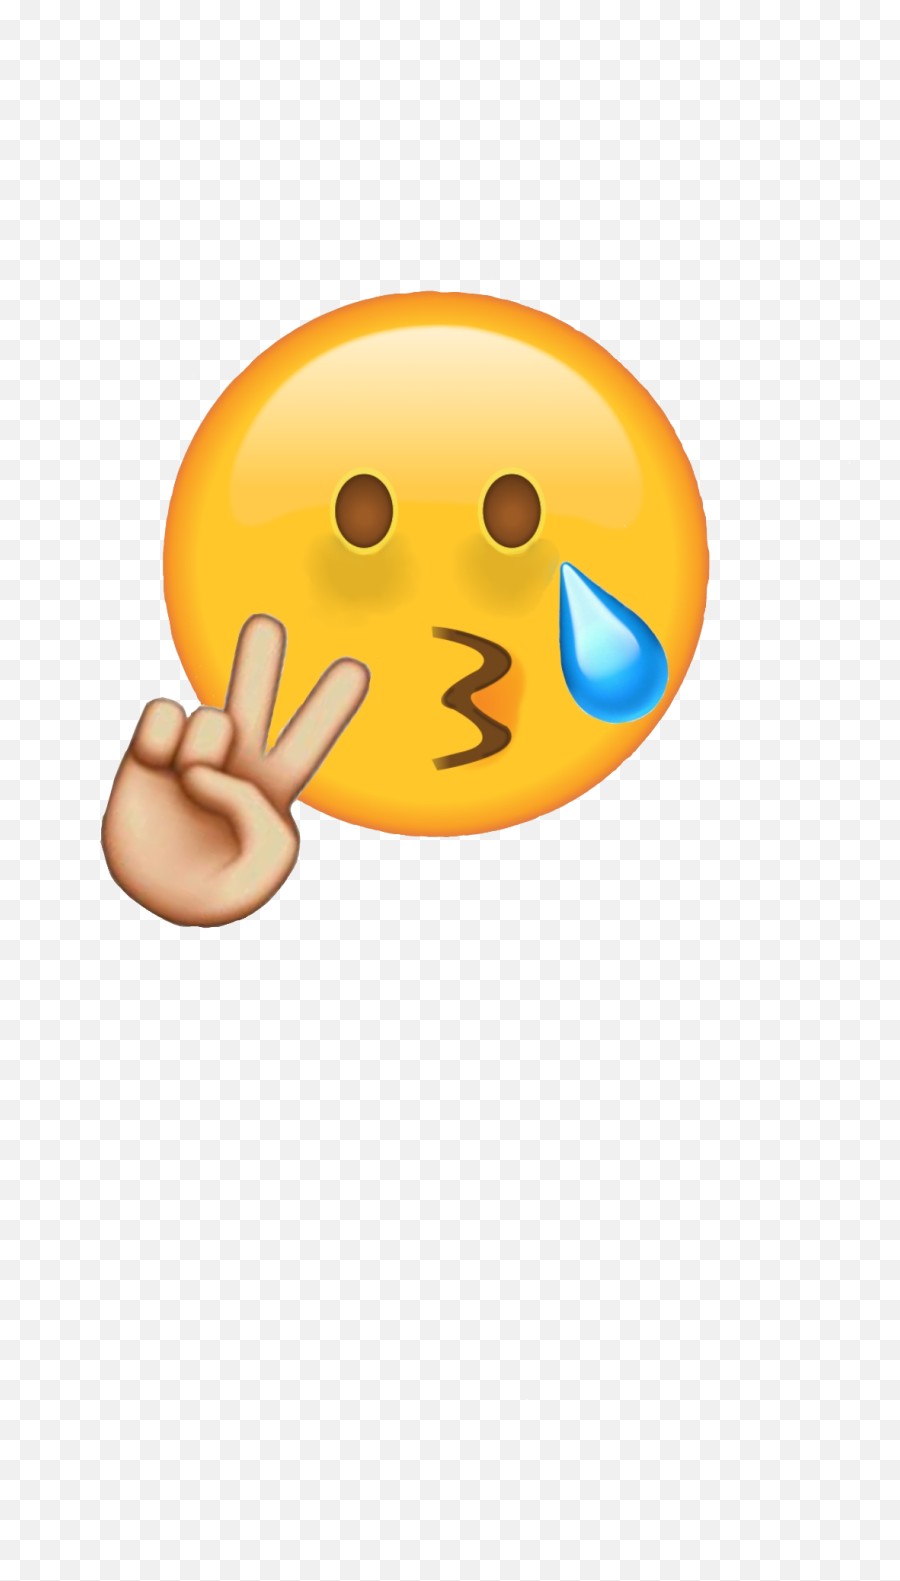 Mentalbreakdown Cry Peacesign Peace Sticker By Lauren - Crying Peace Sign Meme Emoji,Peace Sign Emoji